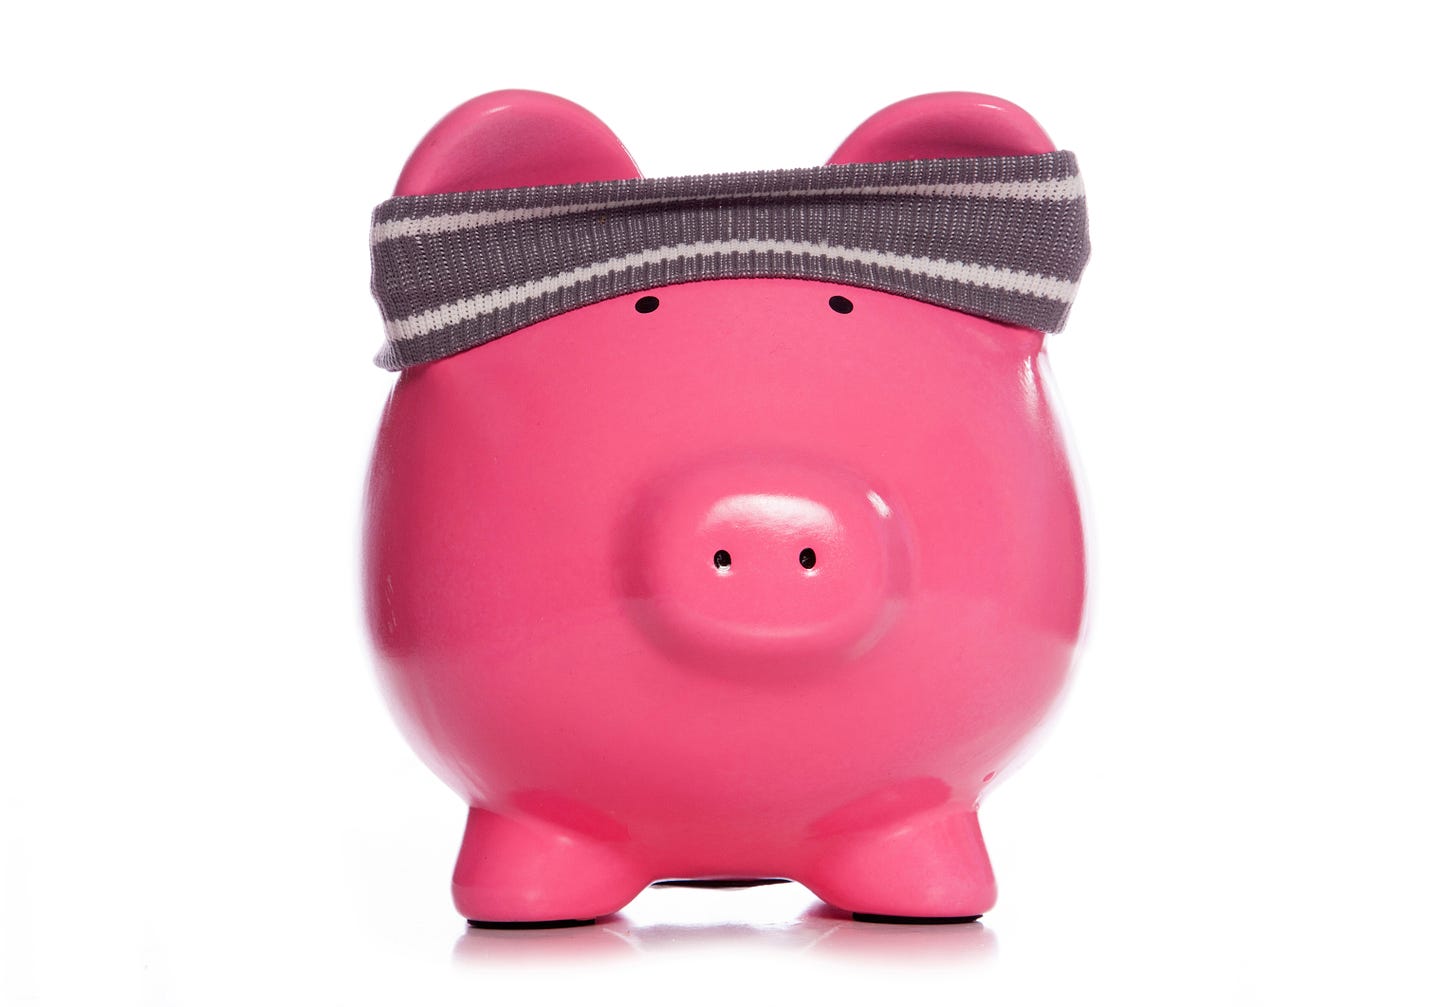 Piggy bank with a sweatband